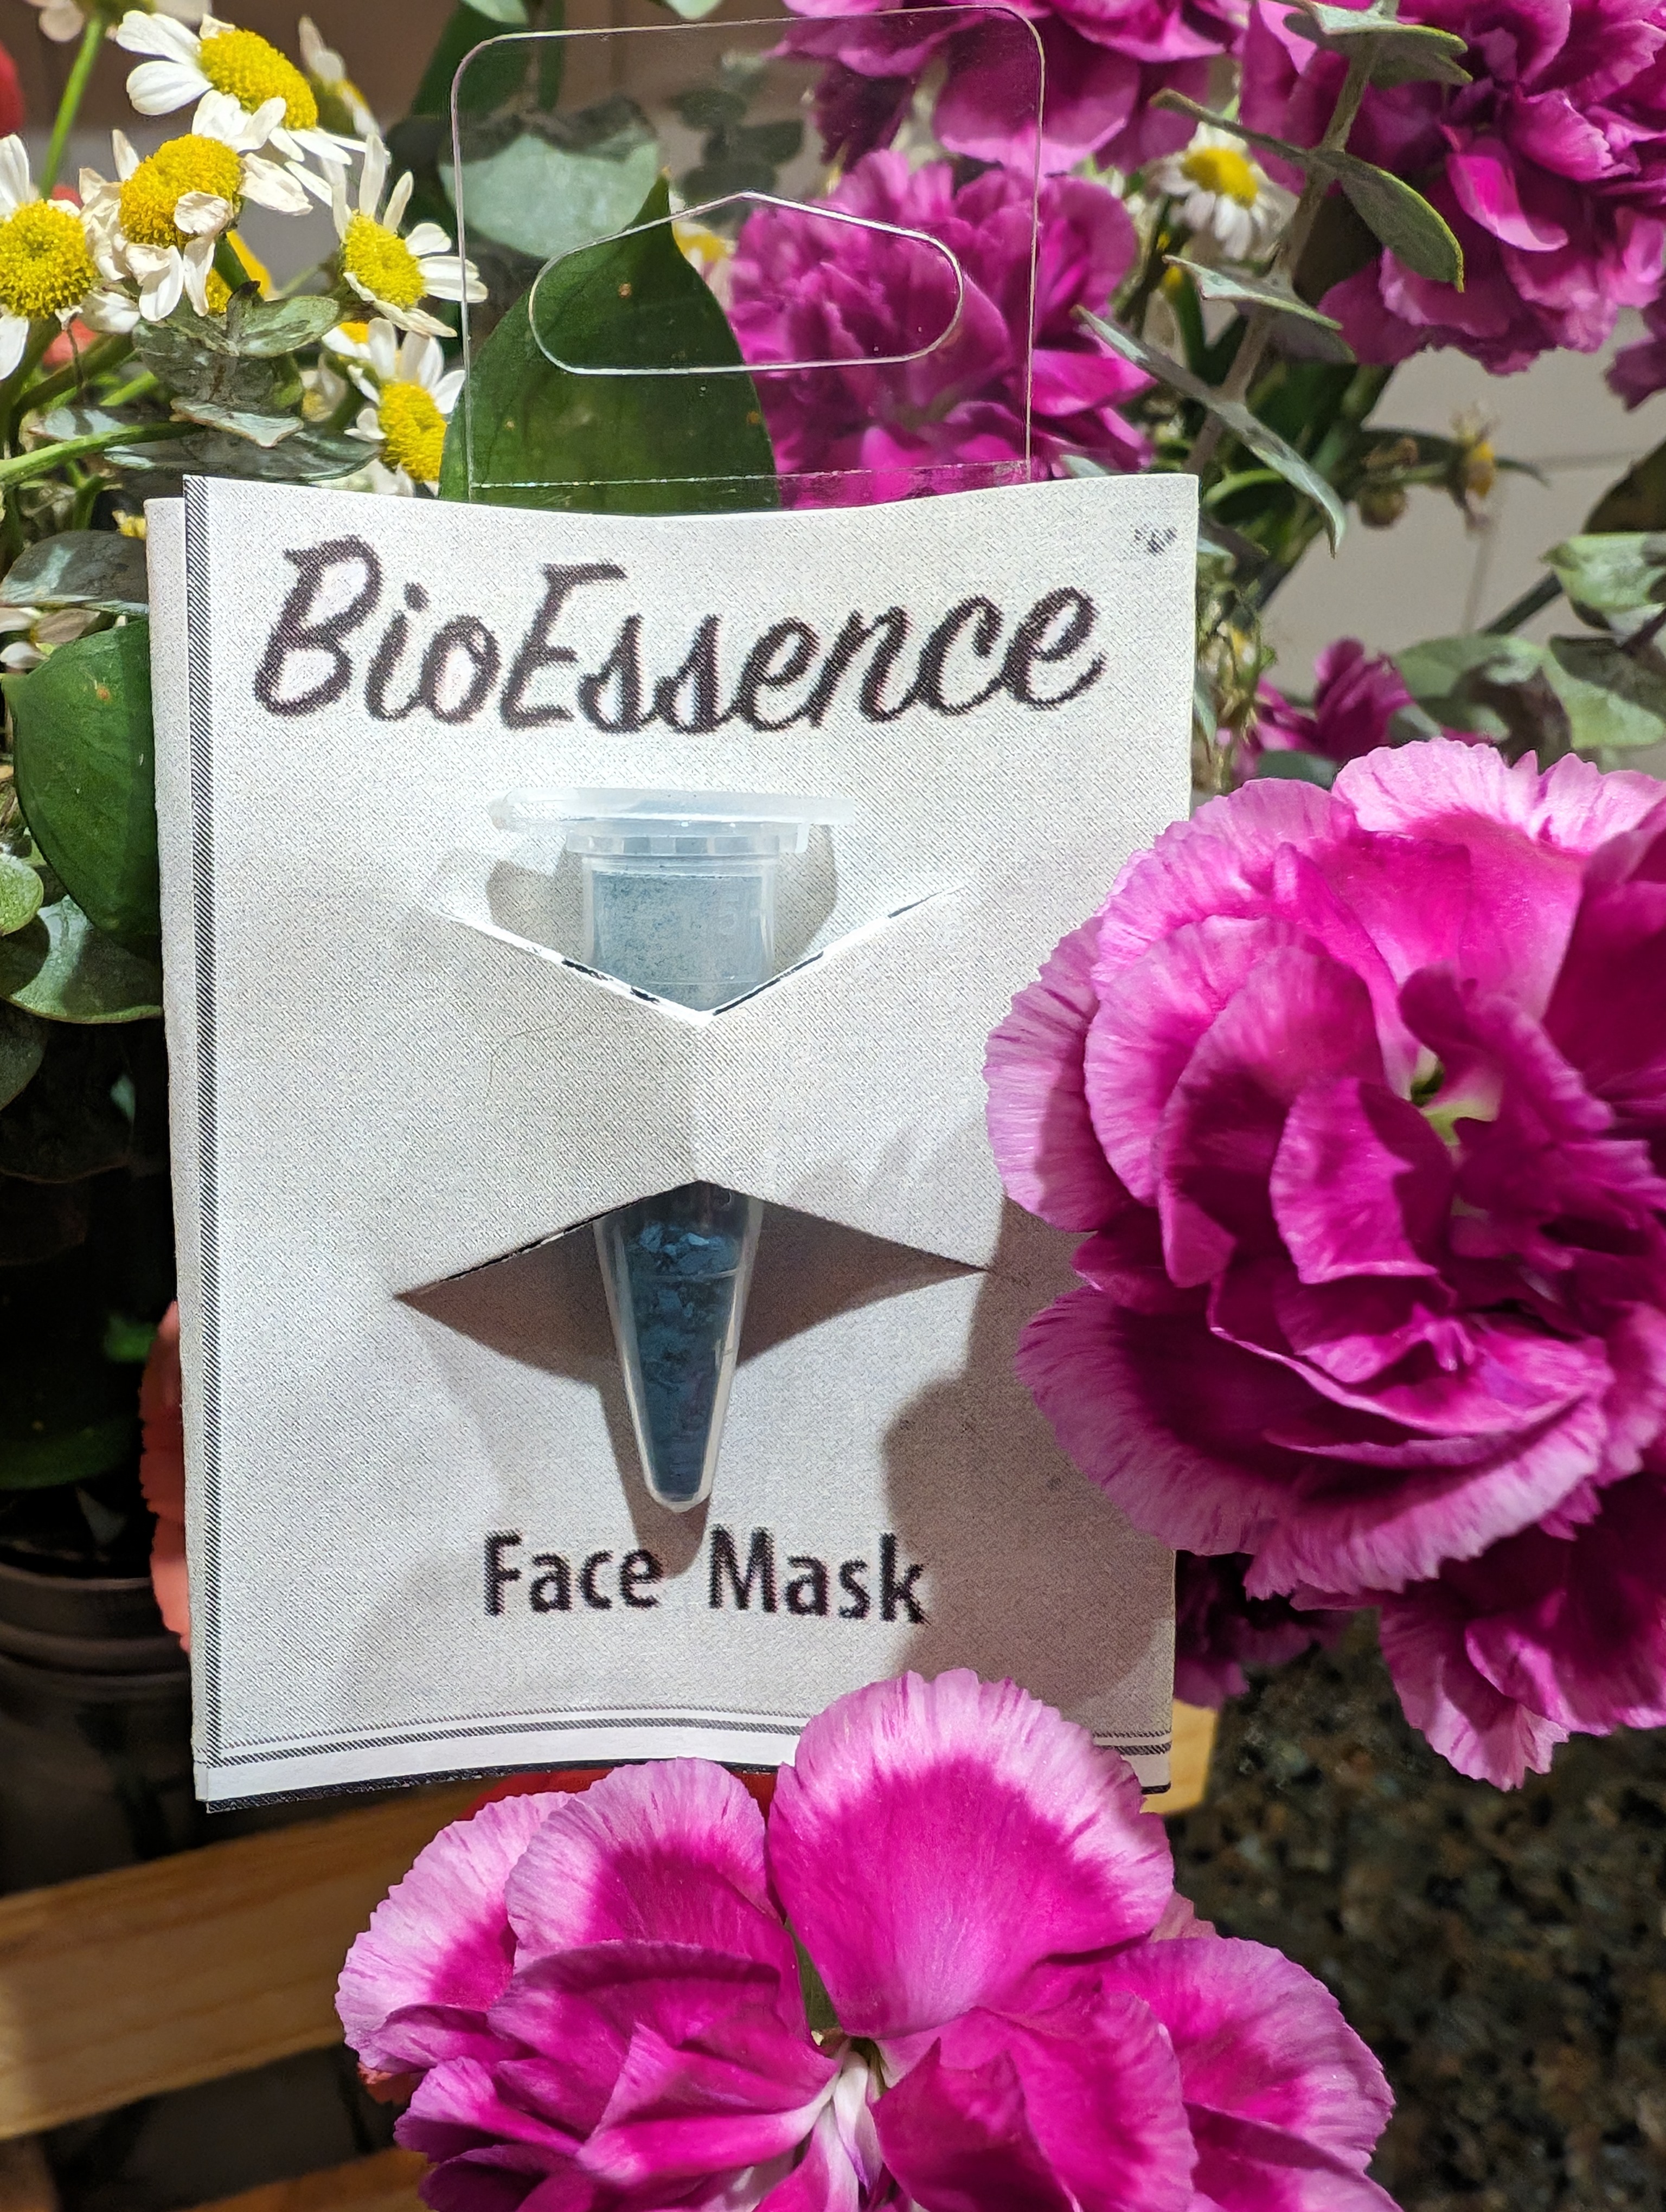 BioEssence cosmetic Face mask photo.